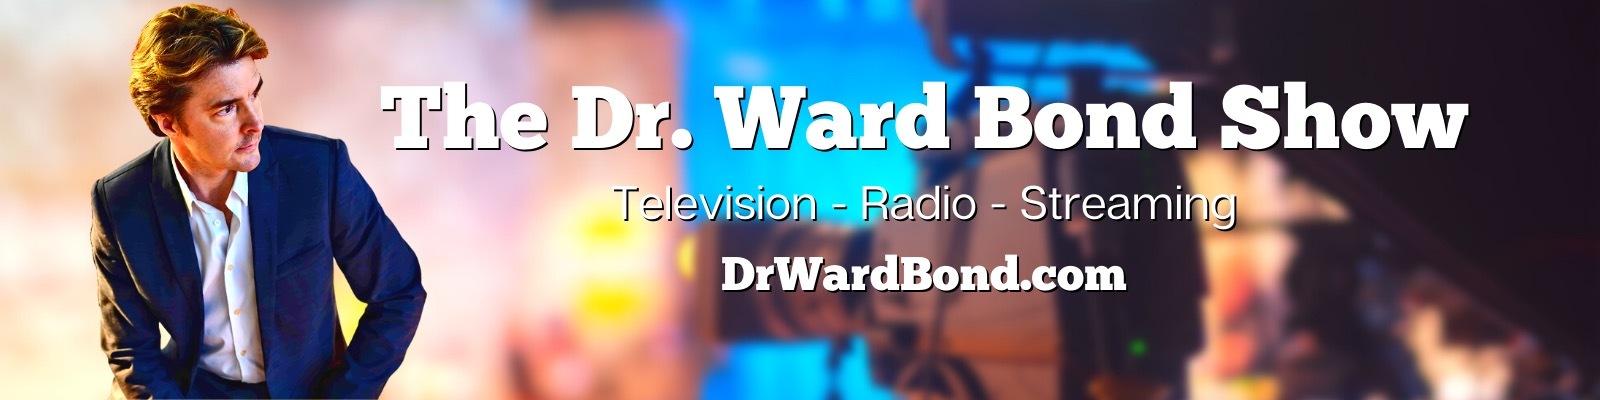 The Dr. Ward Bond Show